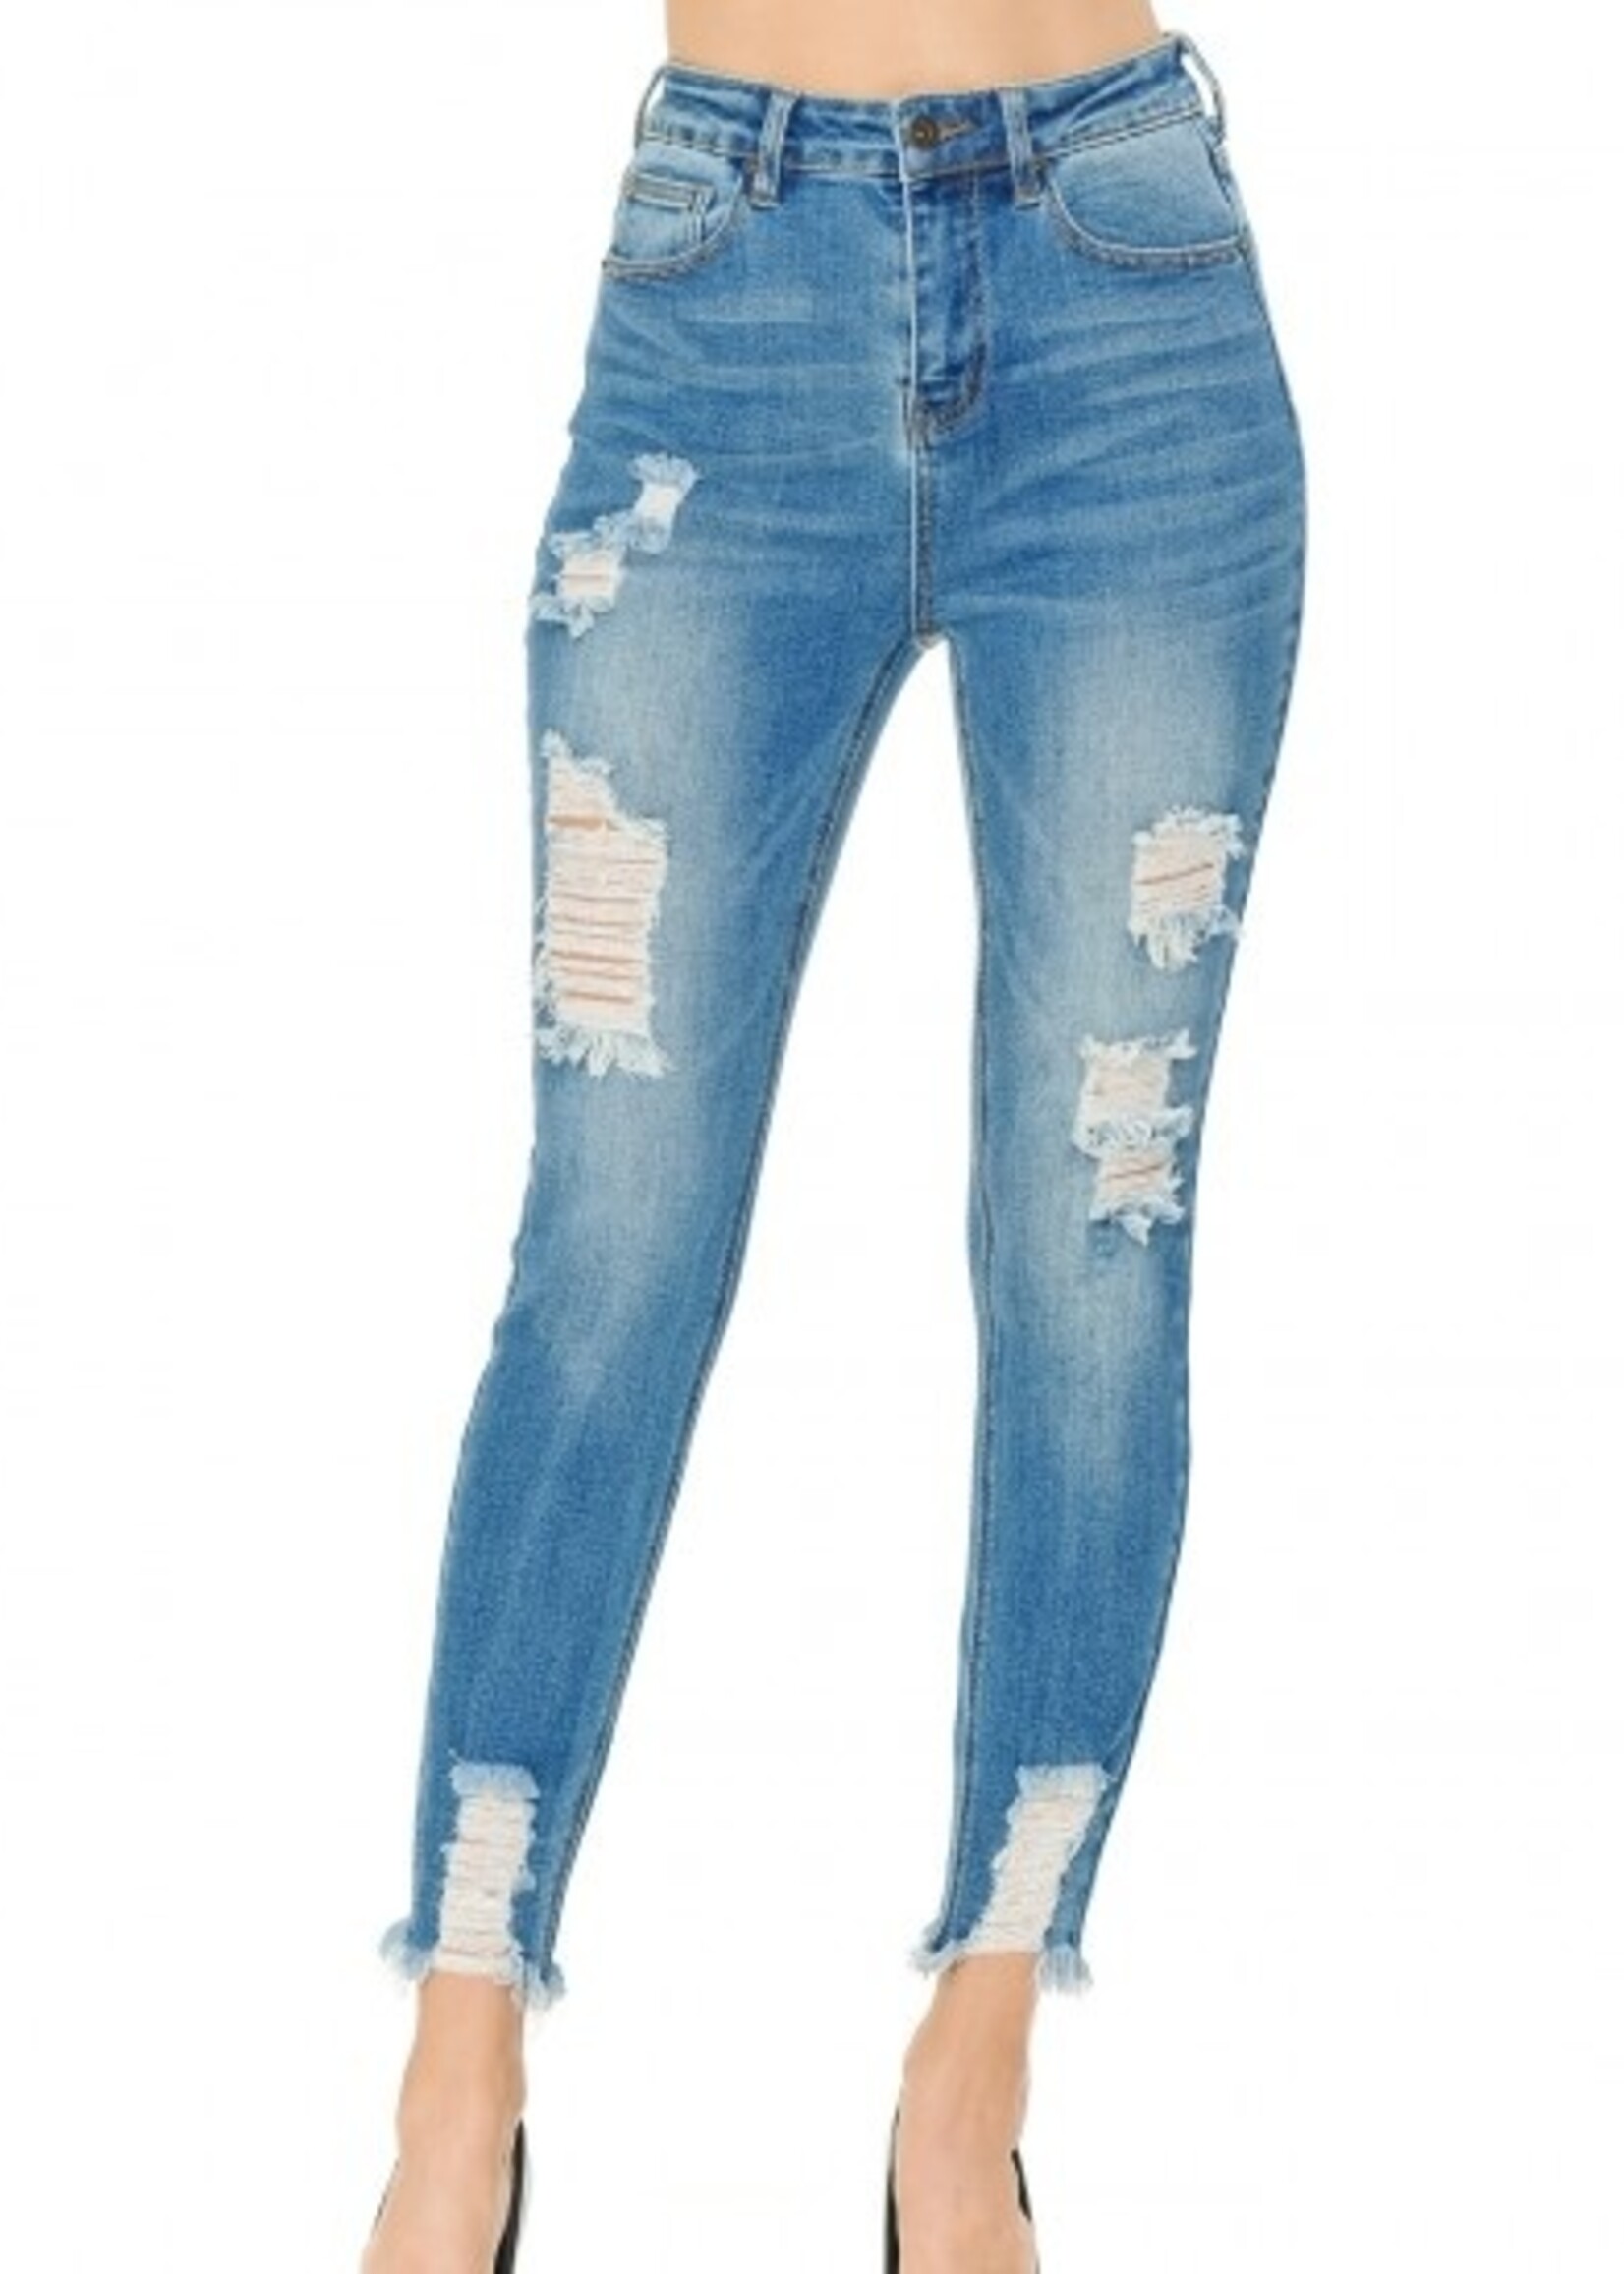 Wax Jeans WAX JEANS WOMEN HIGH-RISE SKINNY JEANS STYLE  90188